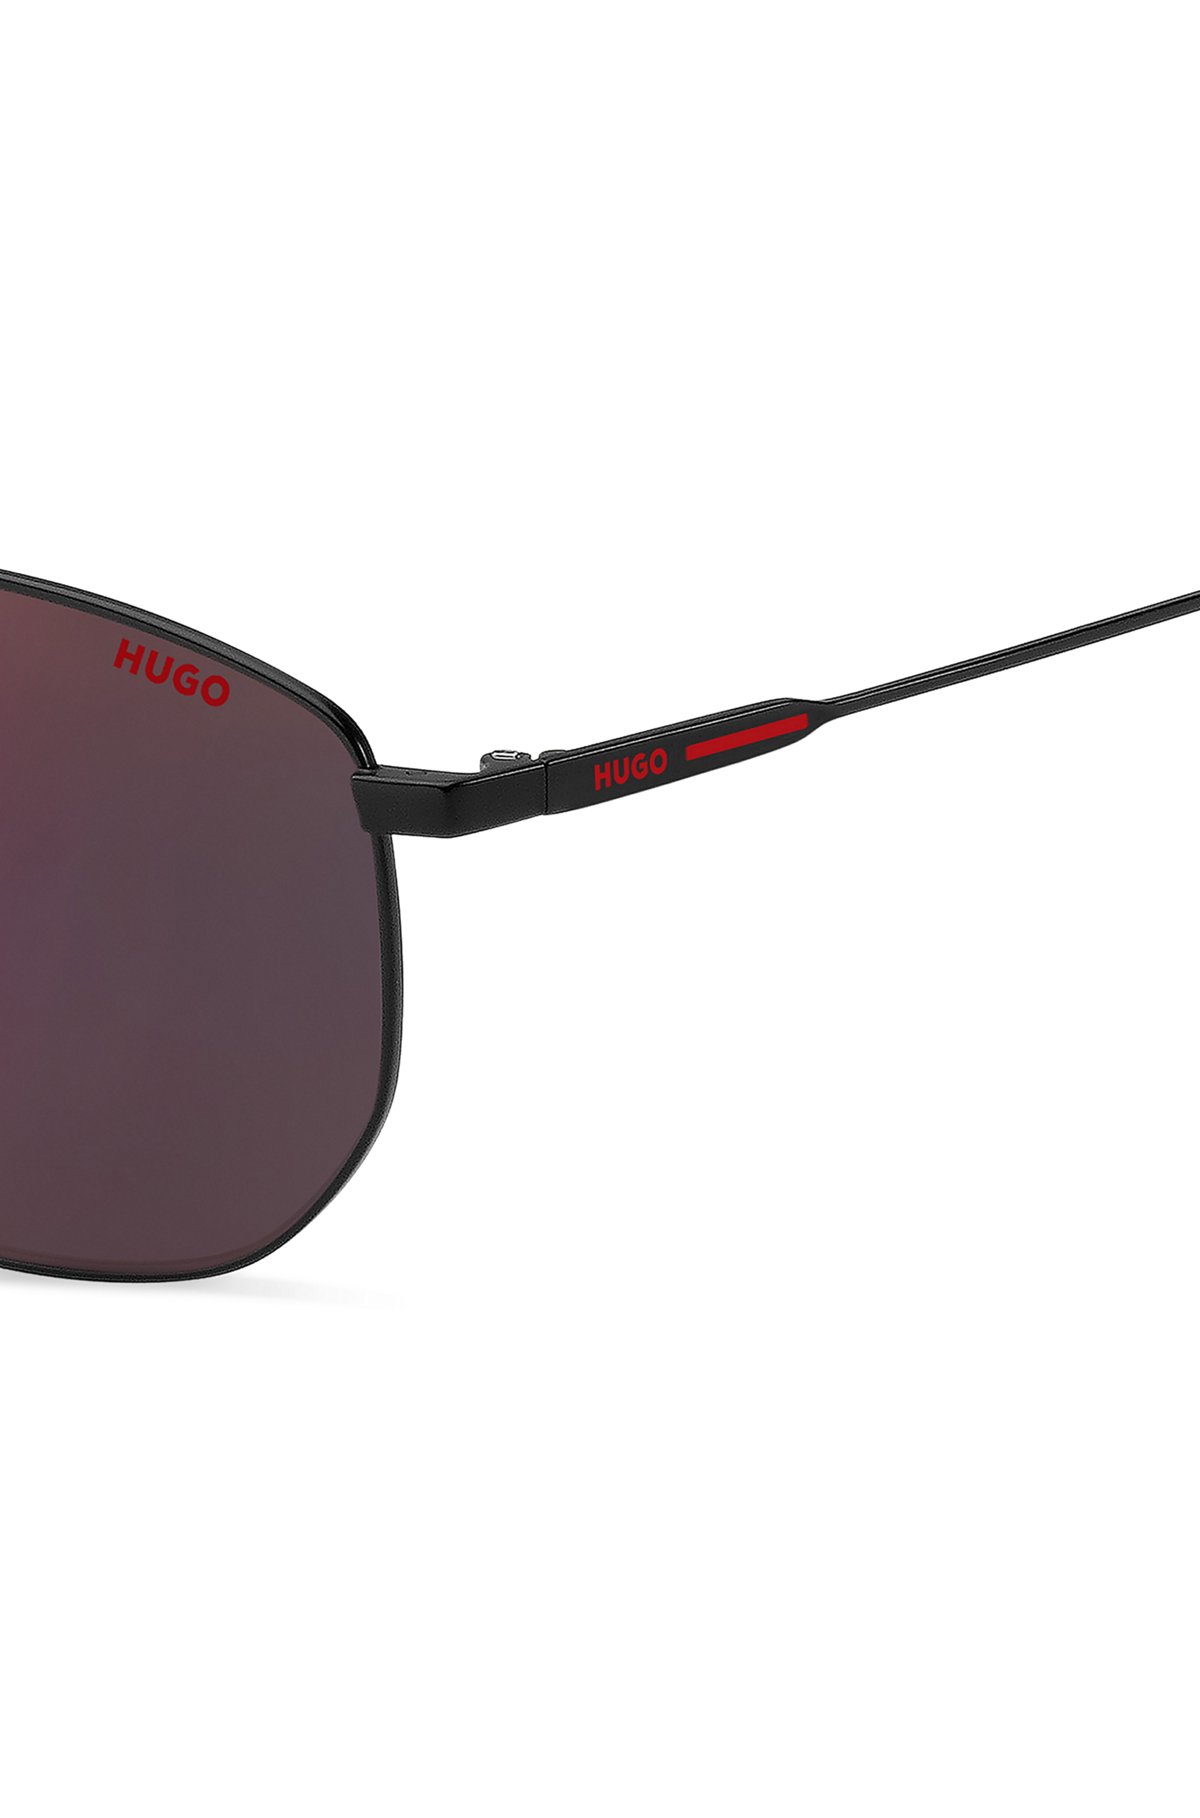 HUGO - Double-bridge sunglasses in black metal with red details